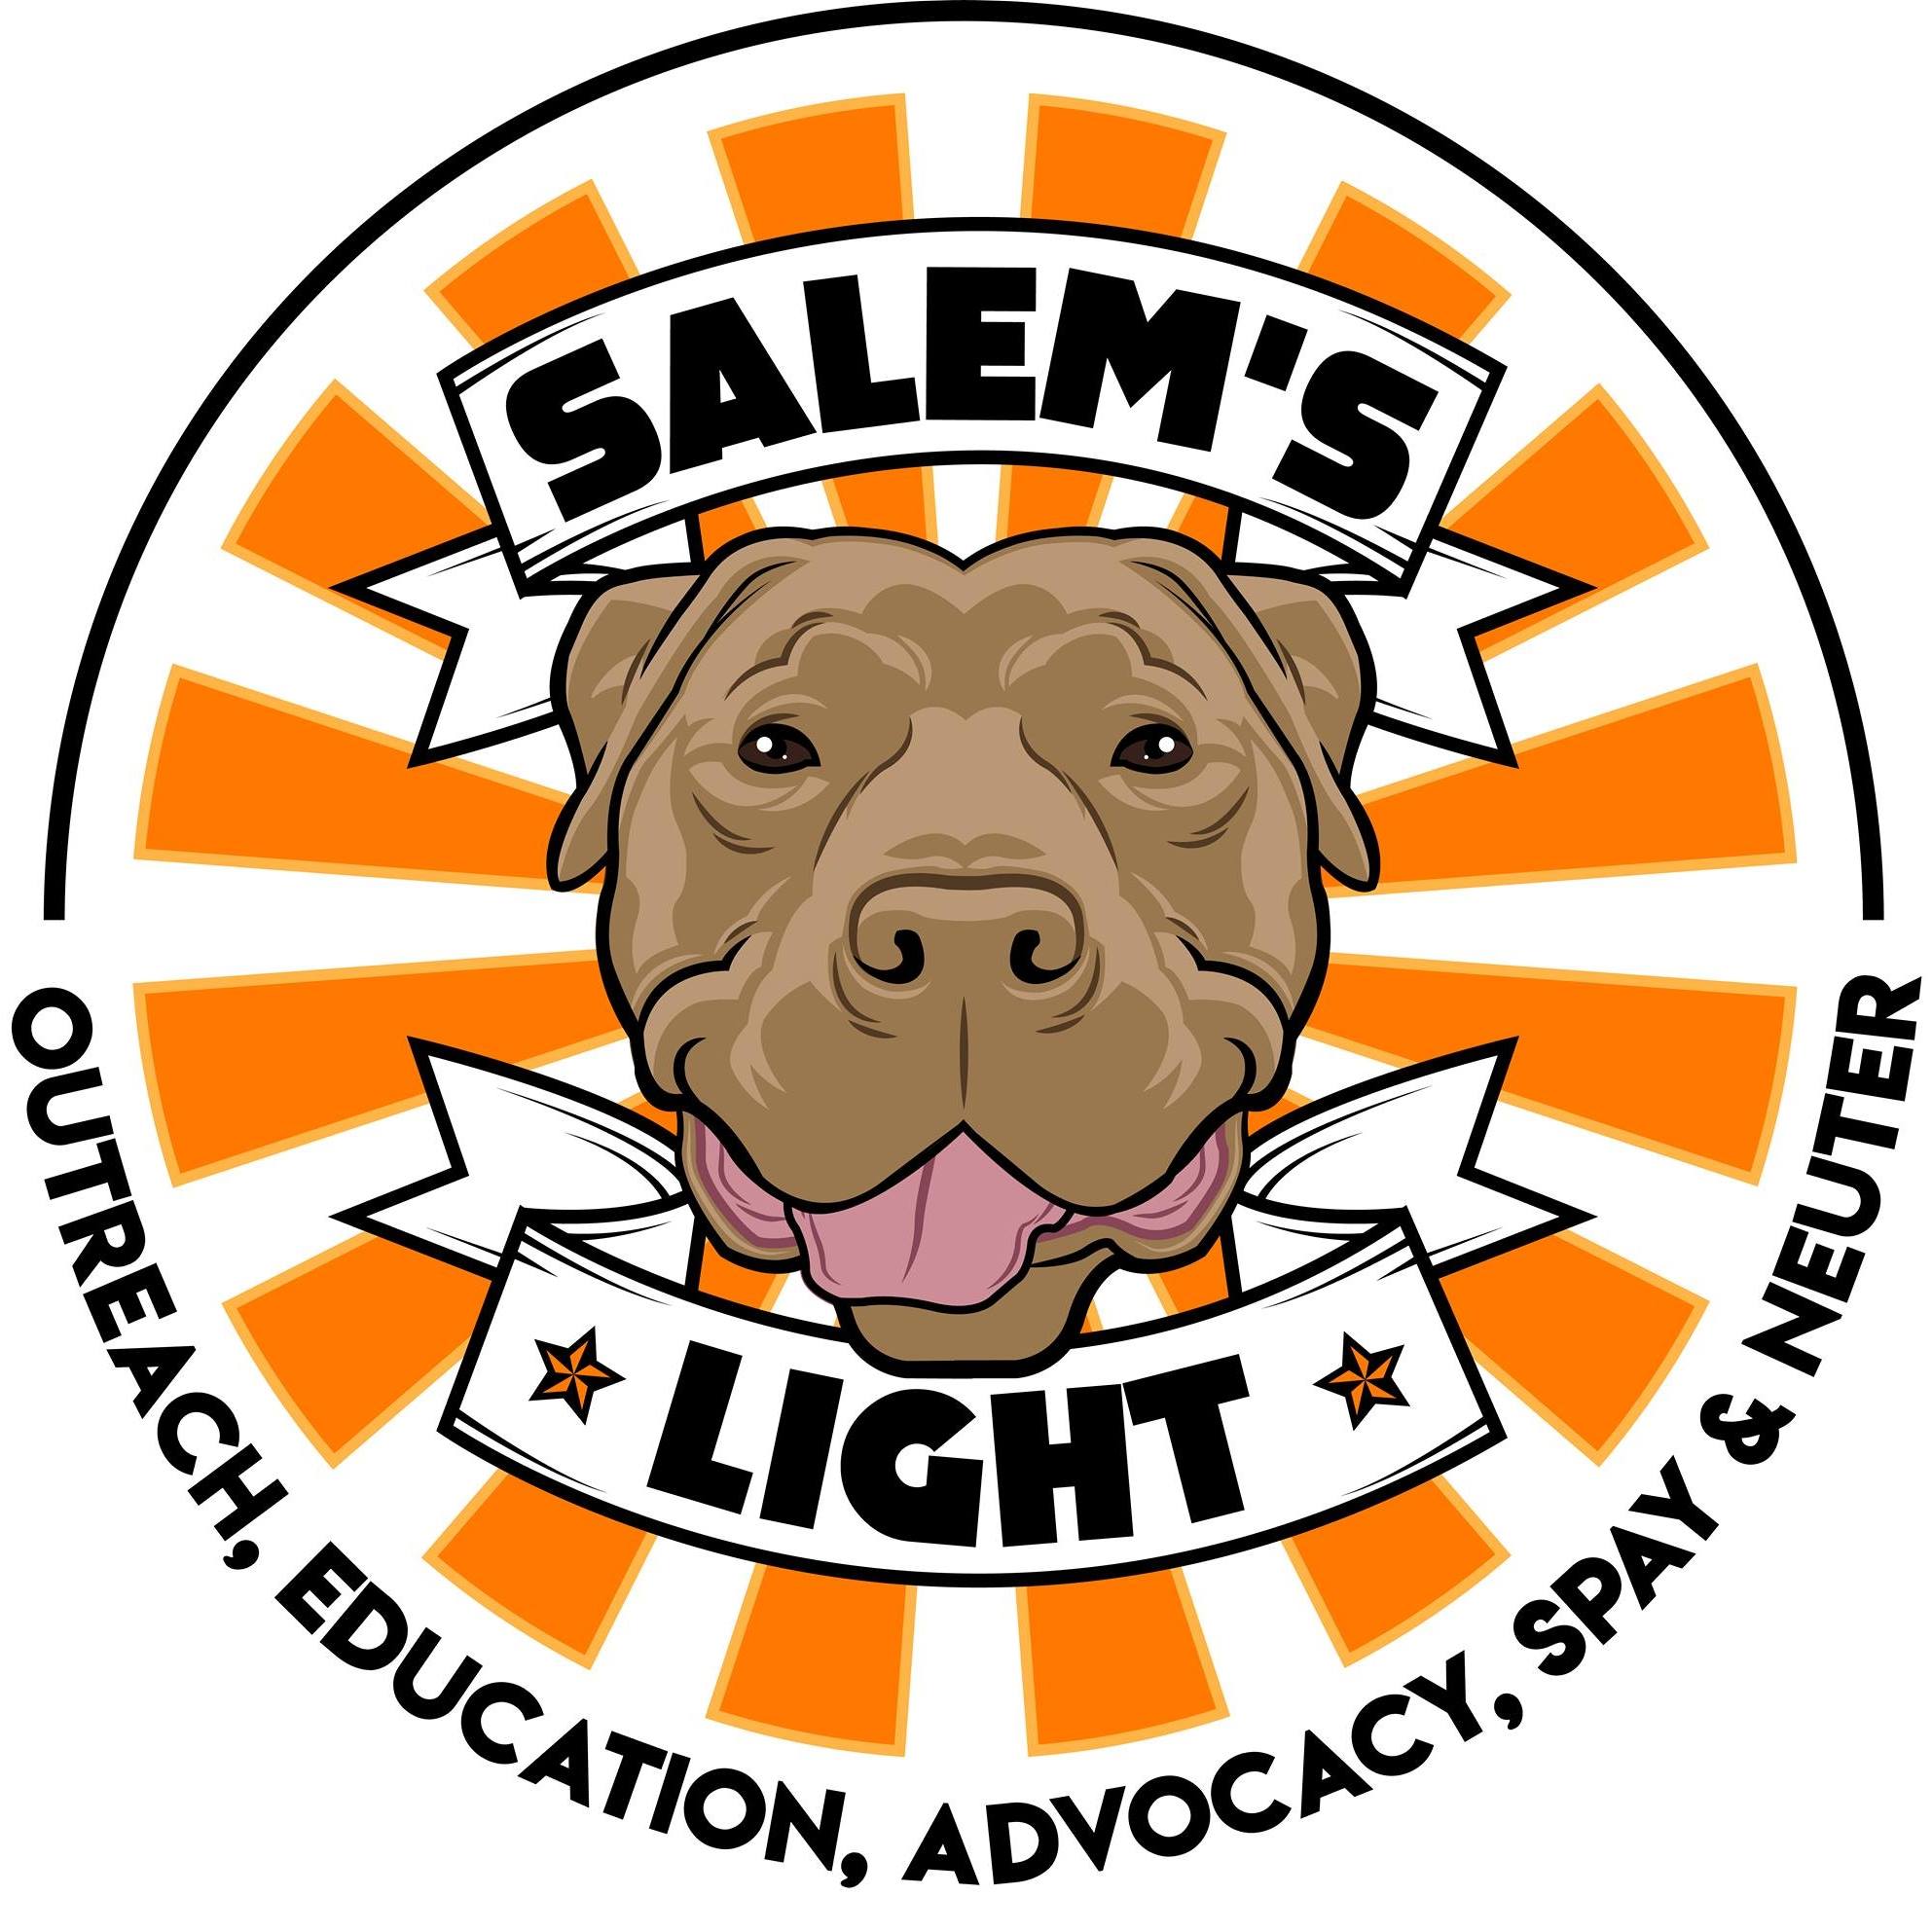 Salems Light Inc.